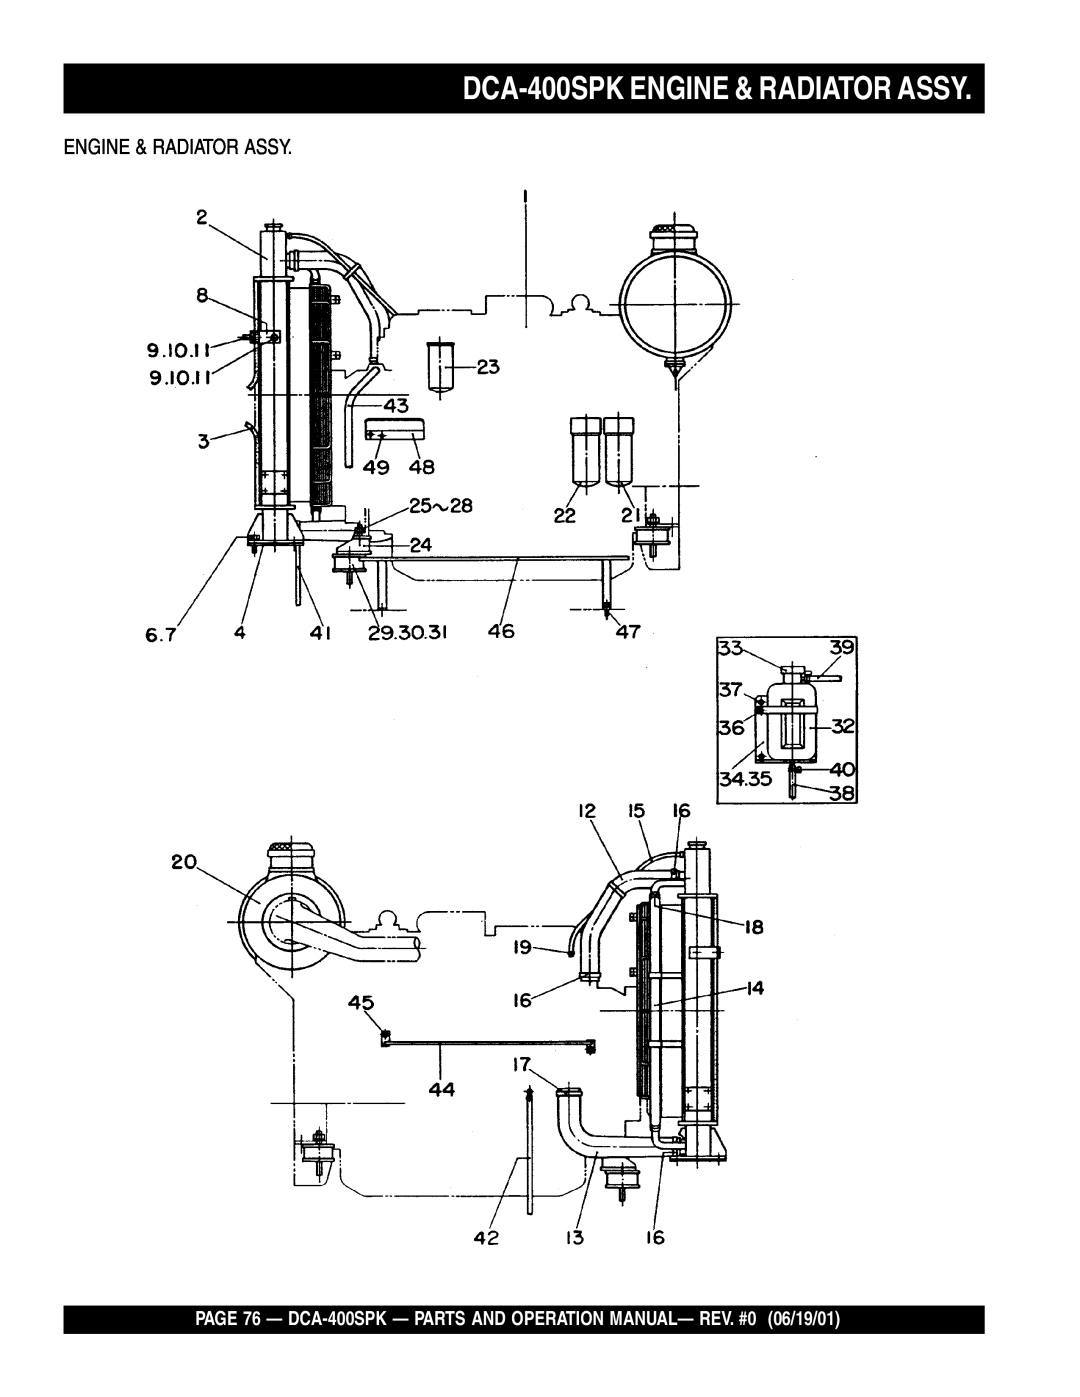 Multiquip operation manual DCA-400SPKENGINE & RADIATOR ASSY, Engine & Radiator Assy 